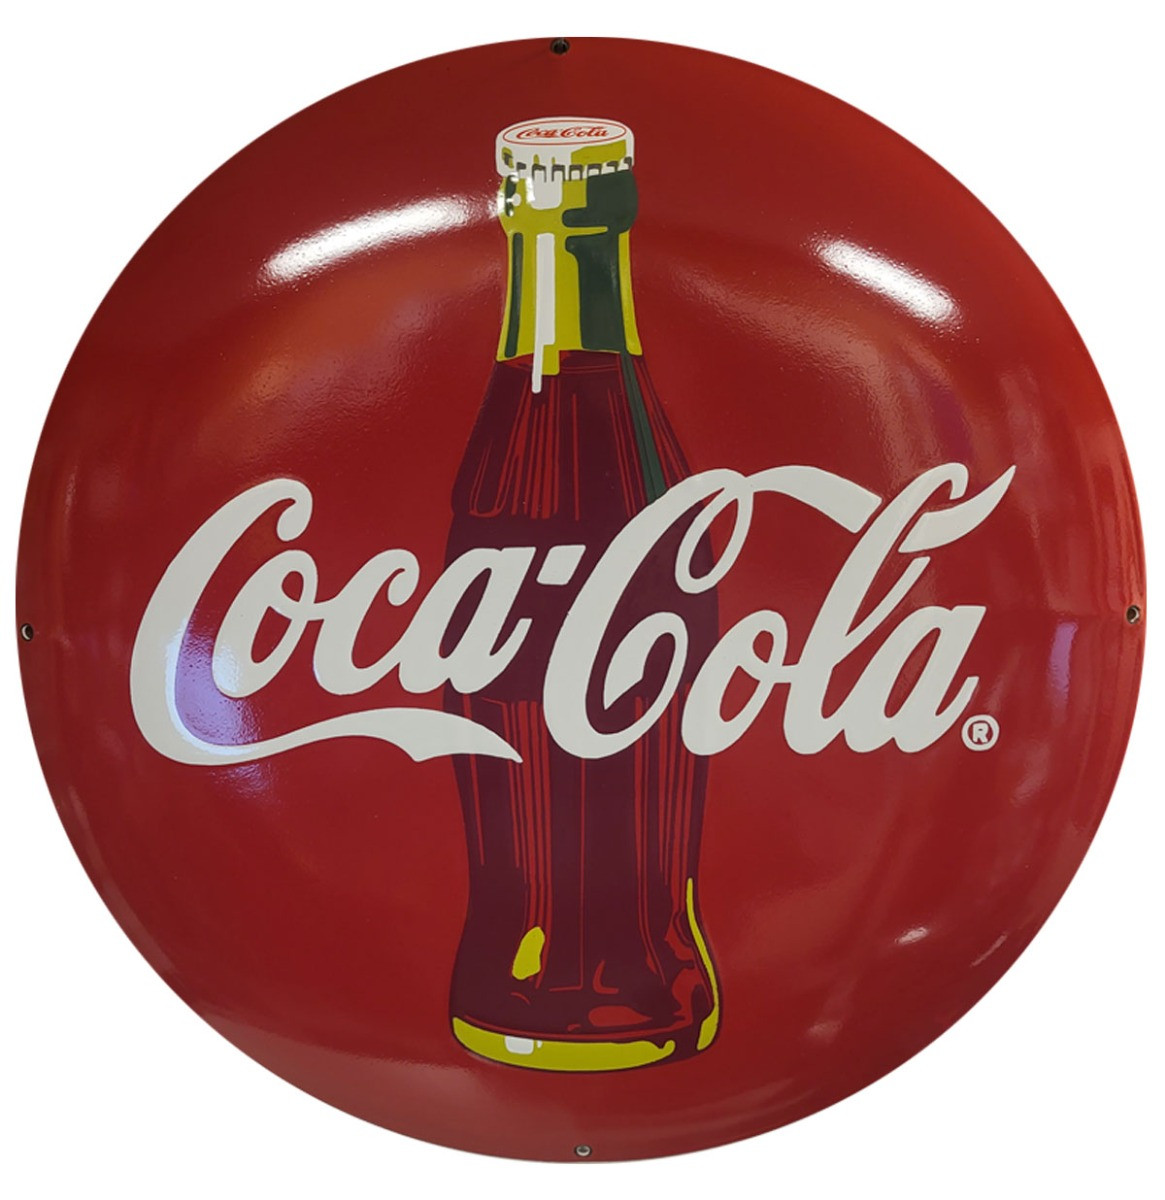 Coca-Cola Fles Emaille Bord - 50 cm ø